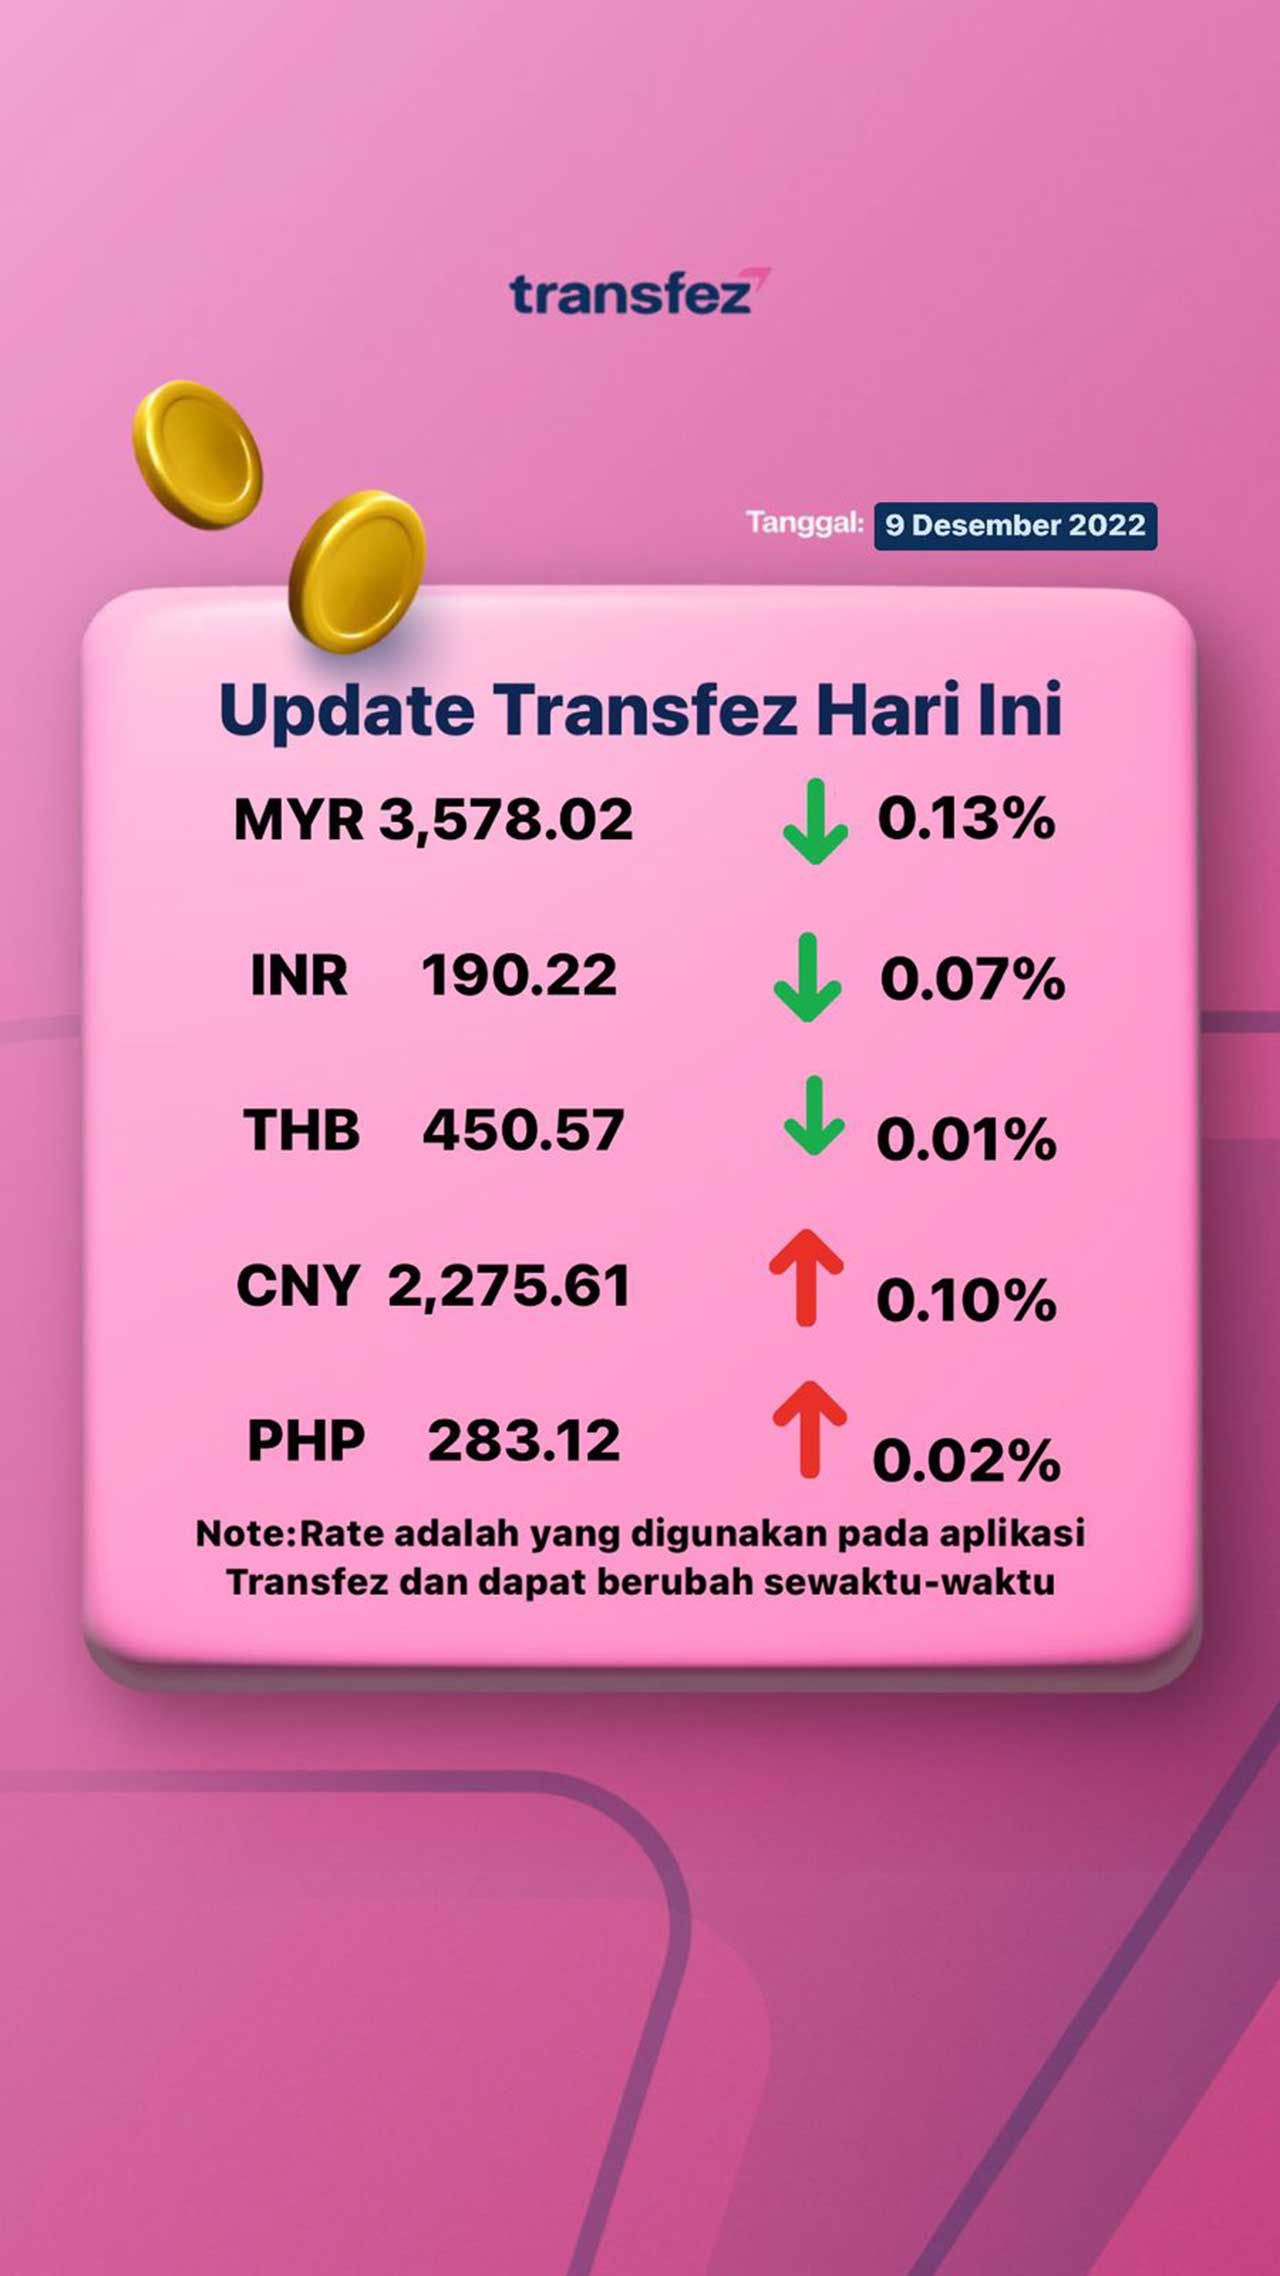 Update Rate Transfez Hari Ini 9 Desember 2022